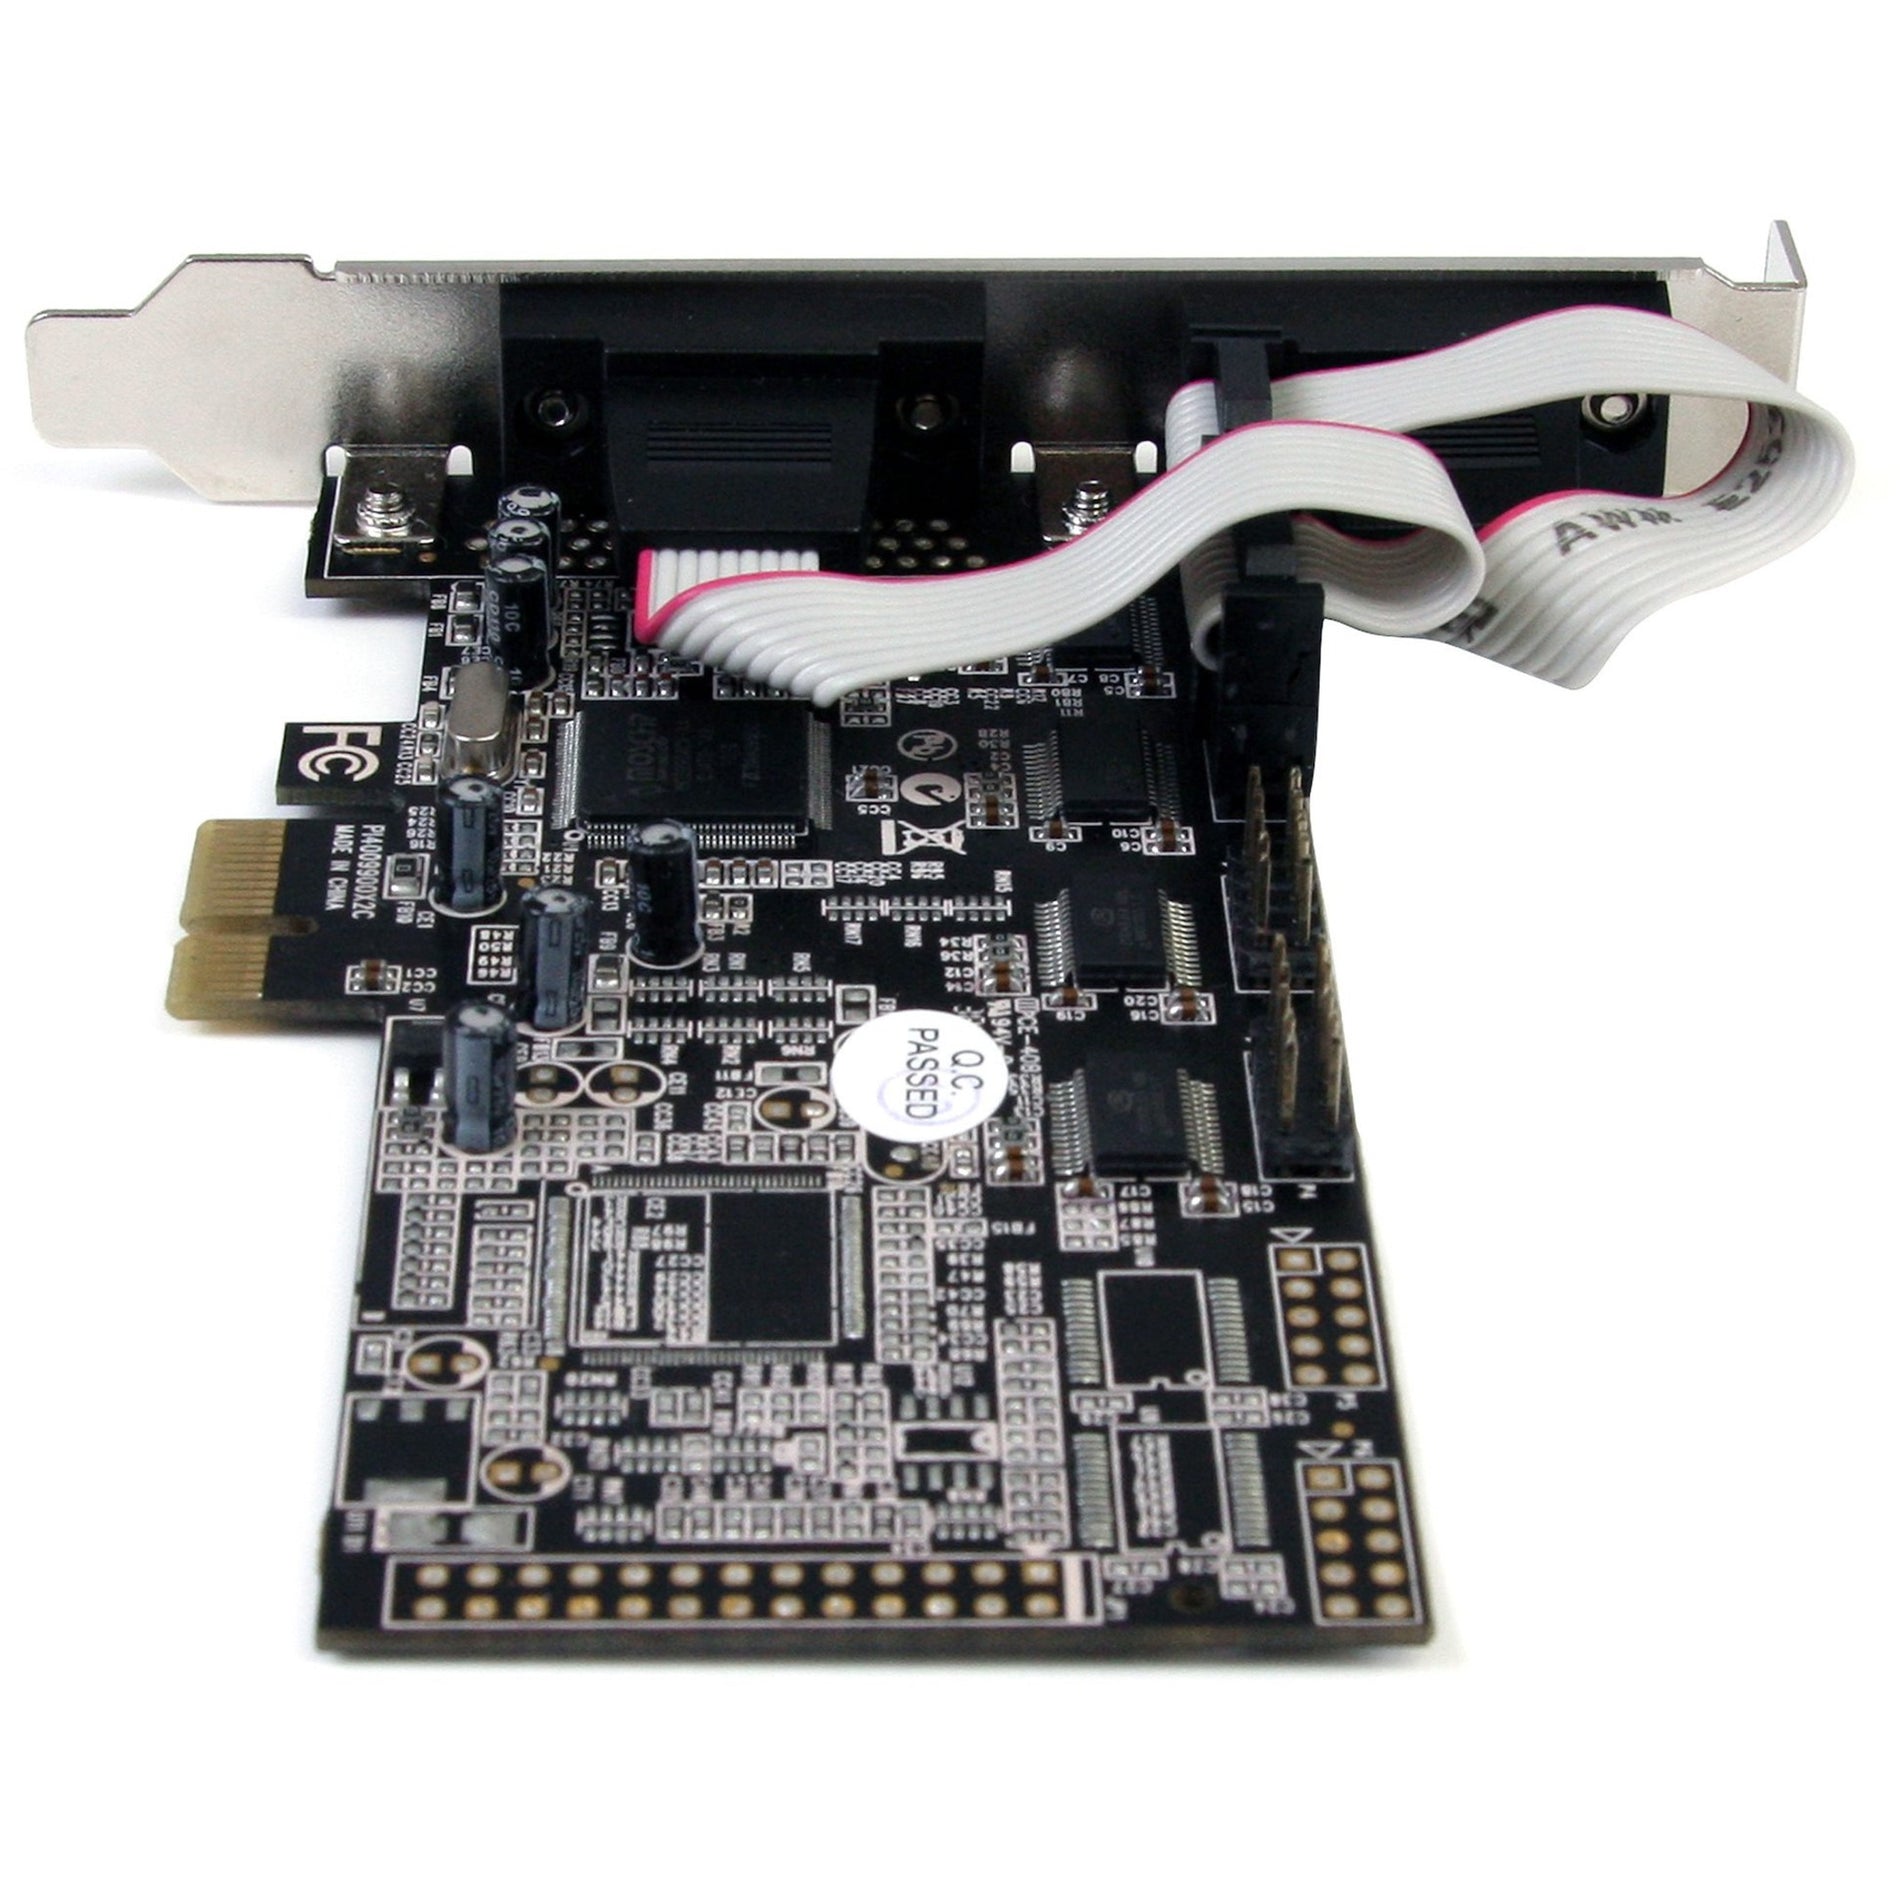 StarTech.com PEX4S553 4 Port Native PCI Express RS232 Serielle Adapterkarte mit 16550 UART High-Speed Datentransfer für PC